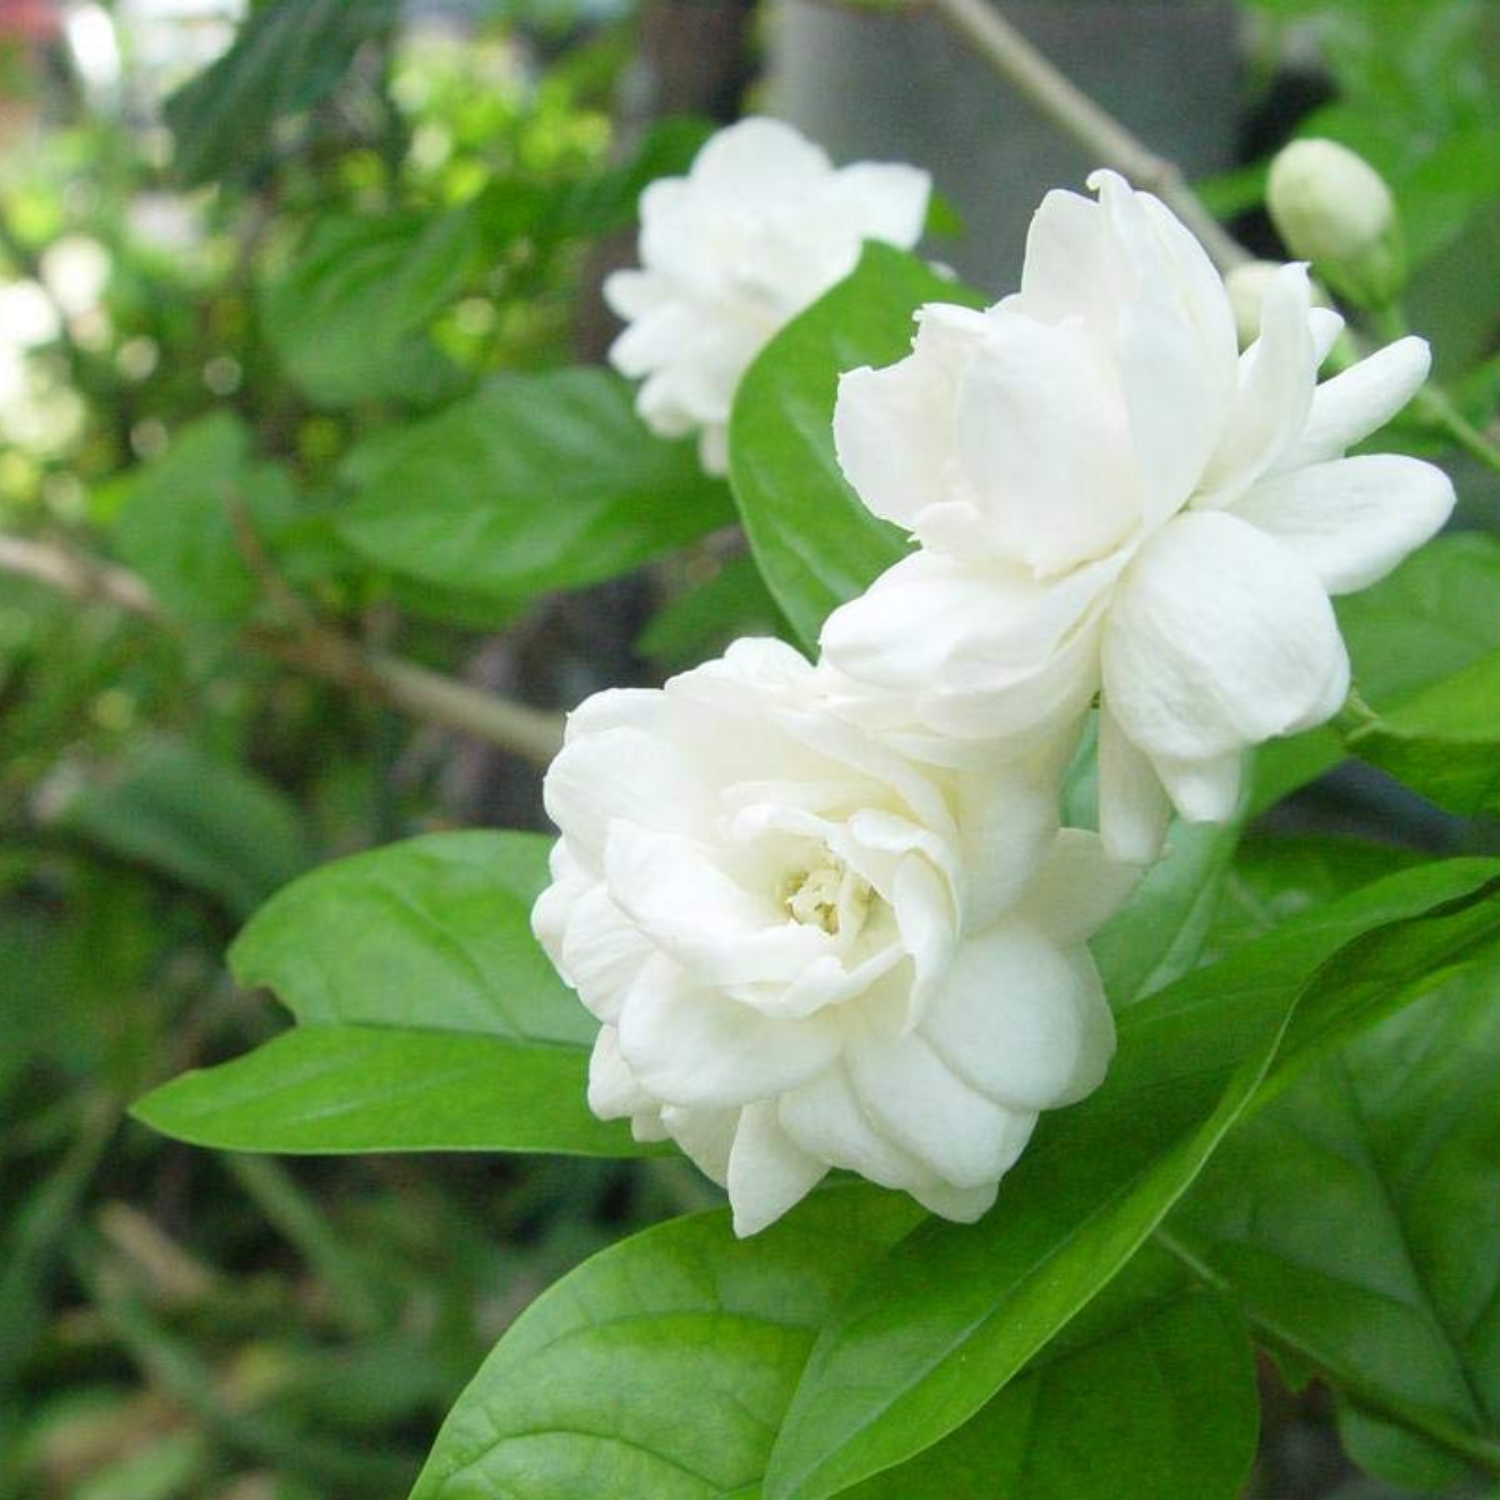 White Arabic Jasmine / Kutti Mulla (Jasminum) Flowering/Ornamental Live Plant (Home & Garden)